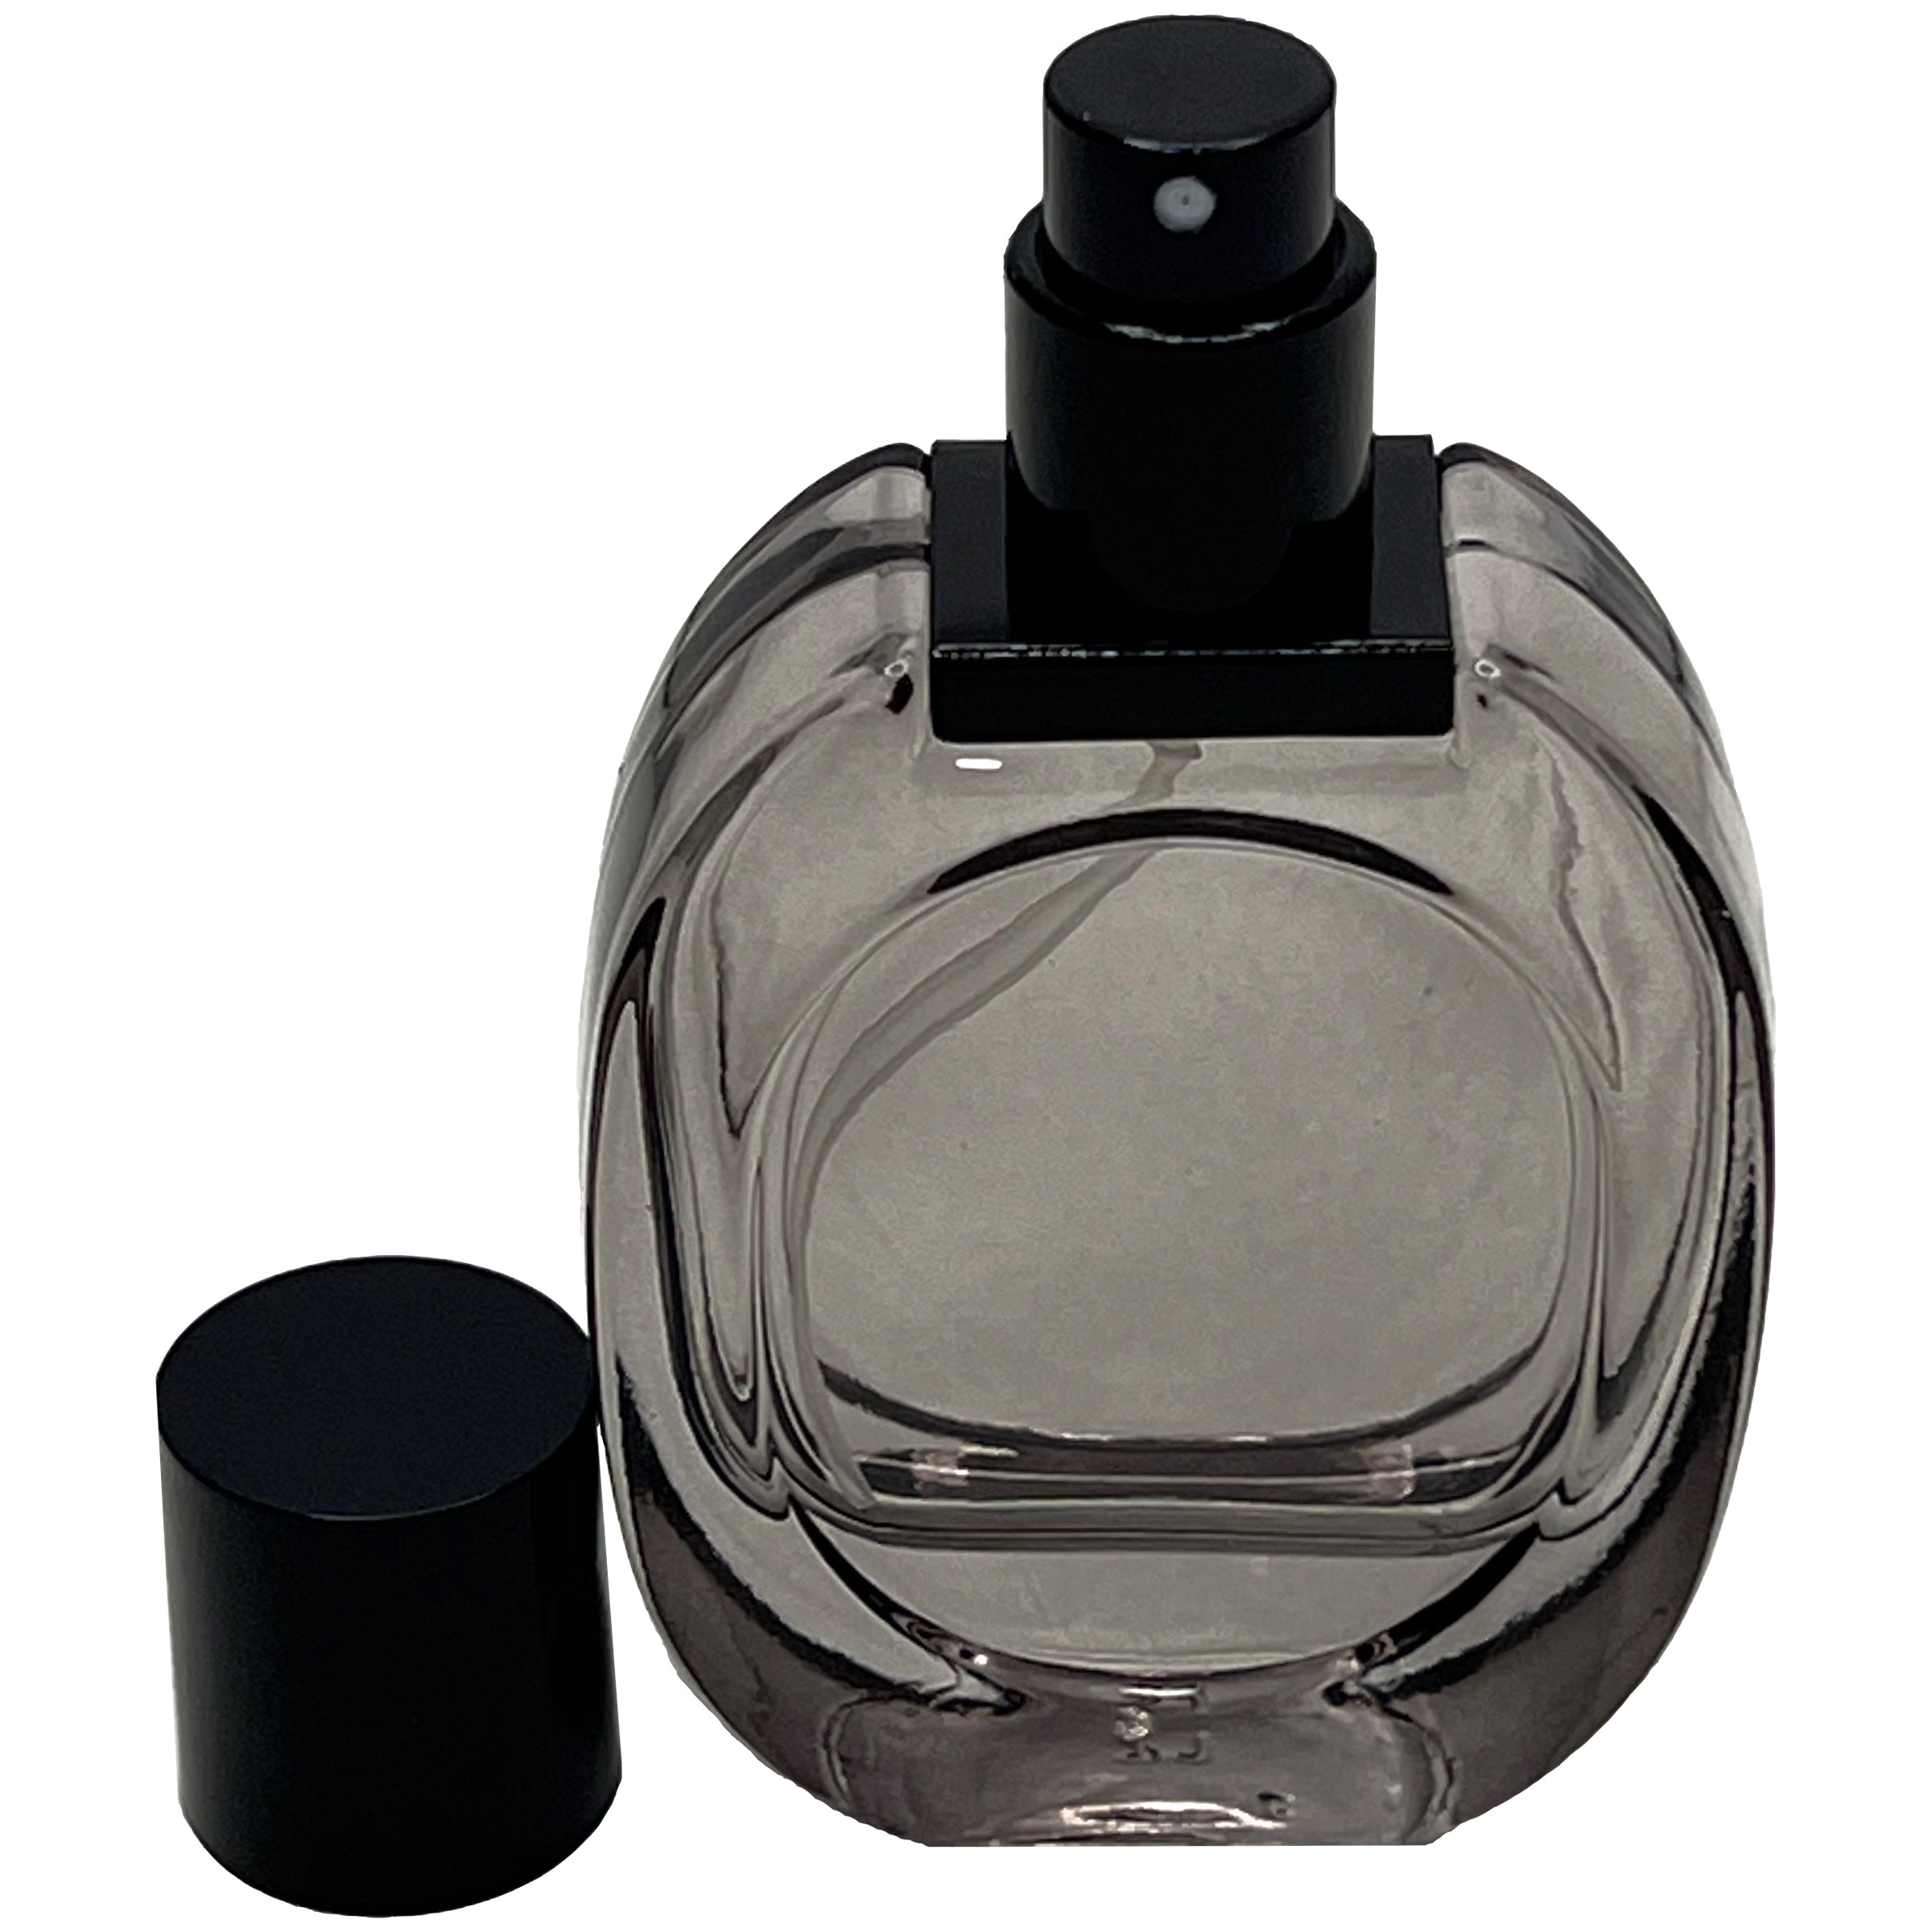 30ml 1oz smoked glass oval perfume spray bottles